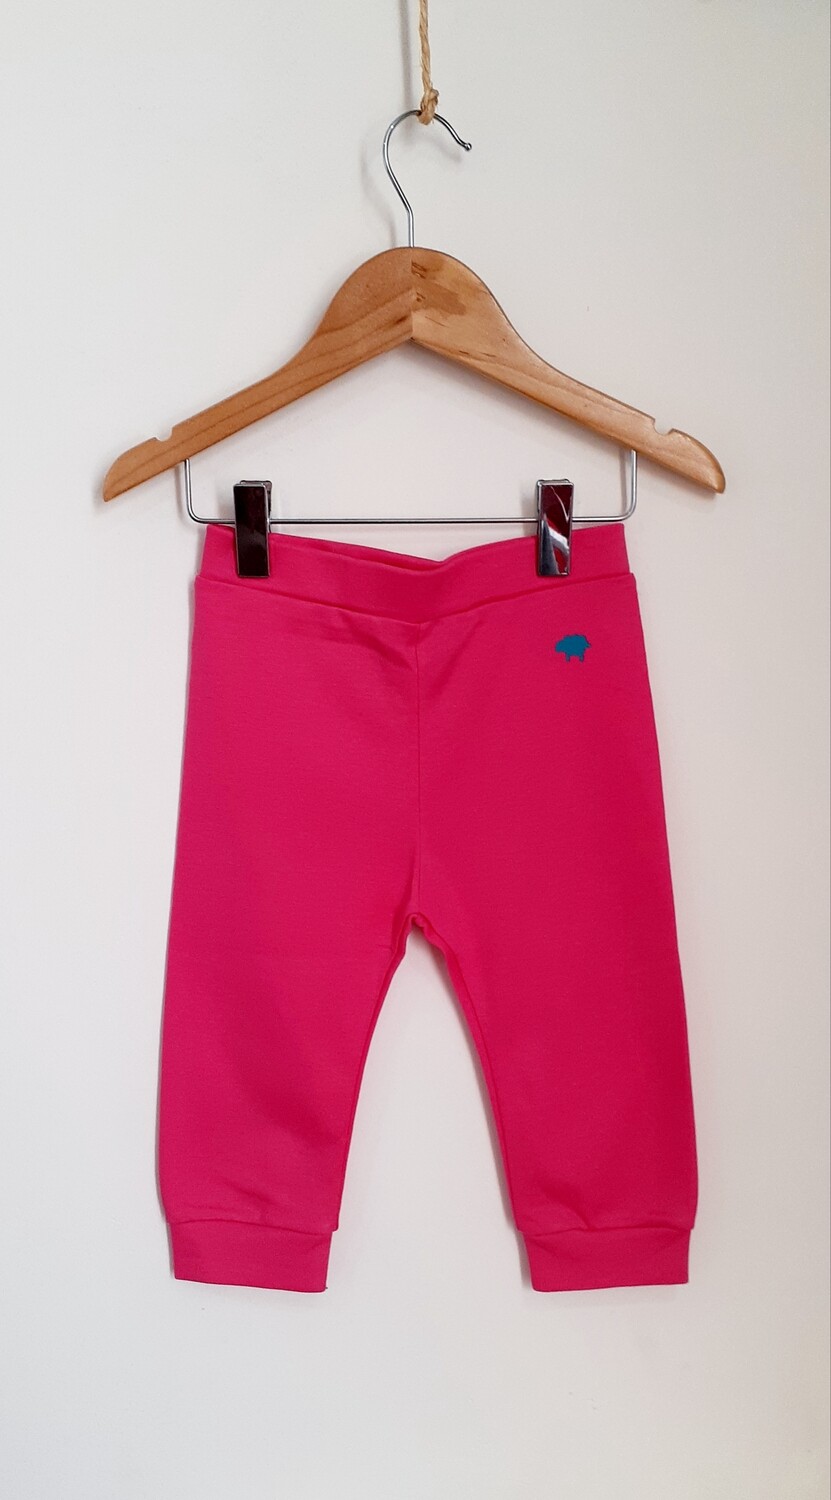 Pantalon de Algodon Fandango Pink Talla 12 a 18 Meses